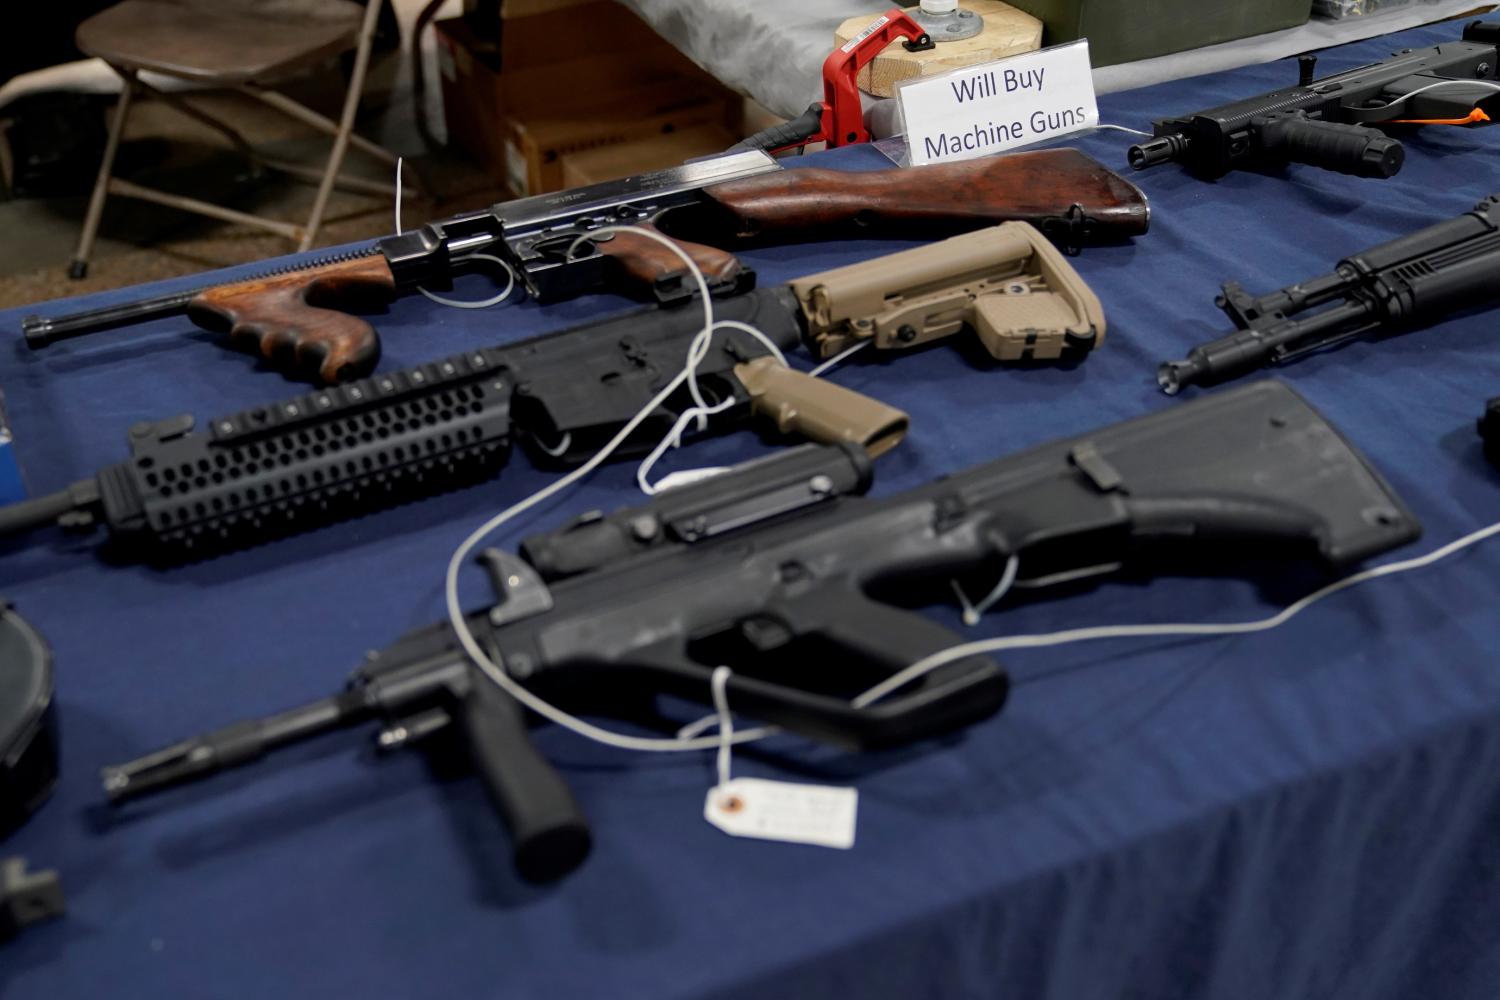 Fully automatic machine guns are displayed for sale at the Guntoberfest gun show in Oaks, Pennsylvania, U.S., October 6, 2017.   REUTERS/Joshua Roberts - RC17126603C0